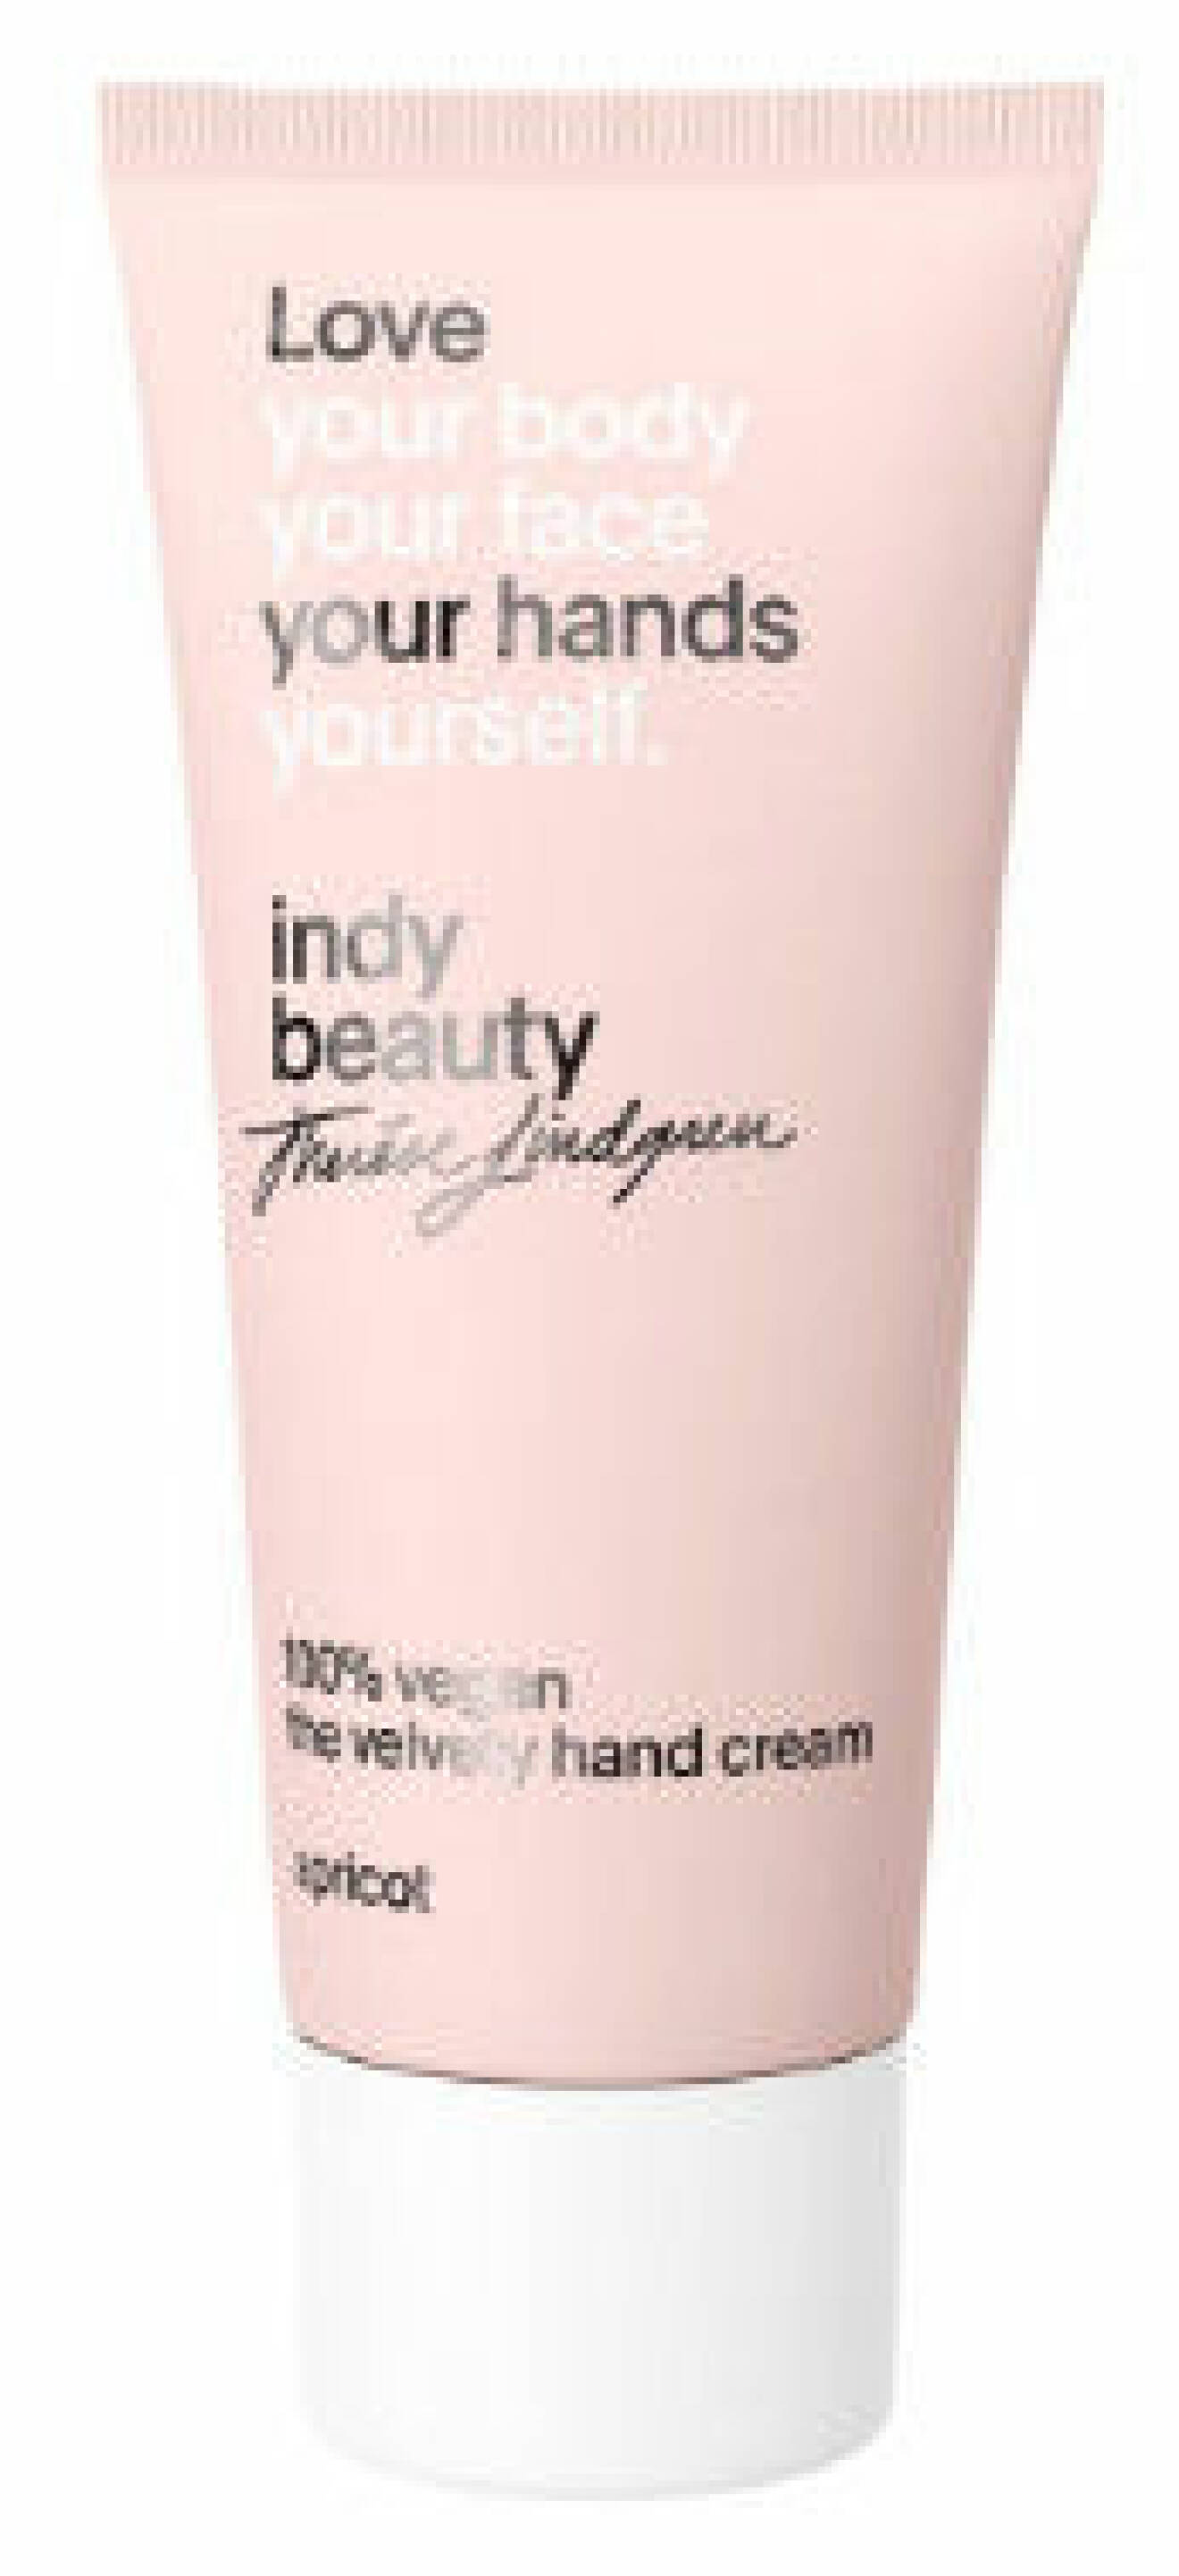 Indy Beauty handkräm